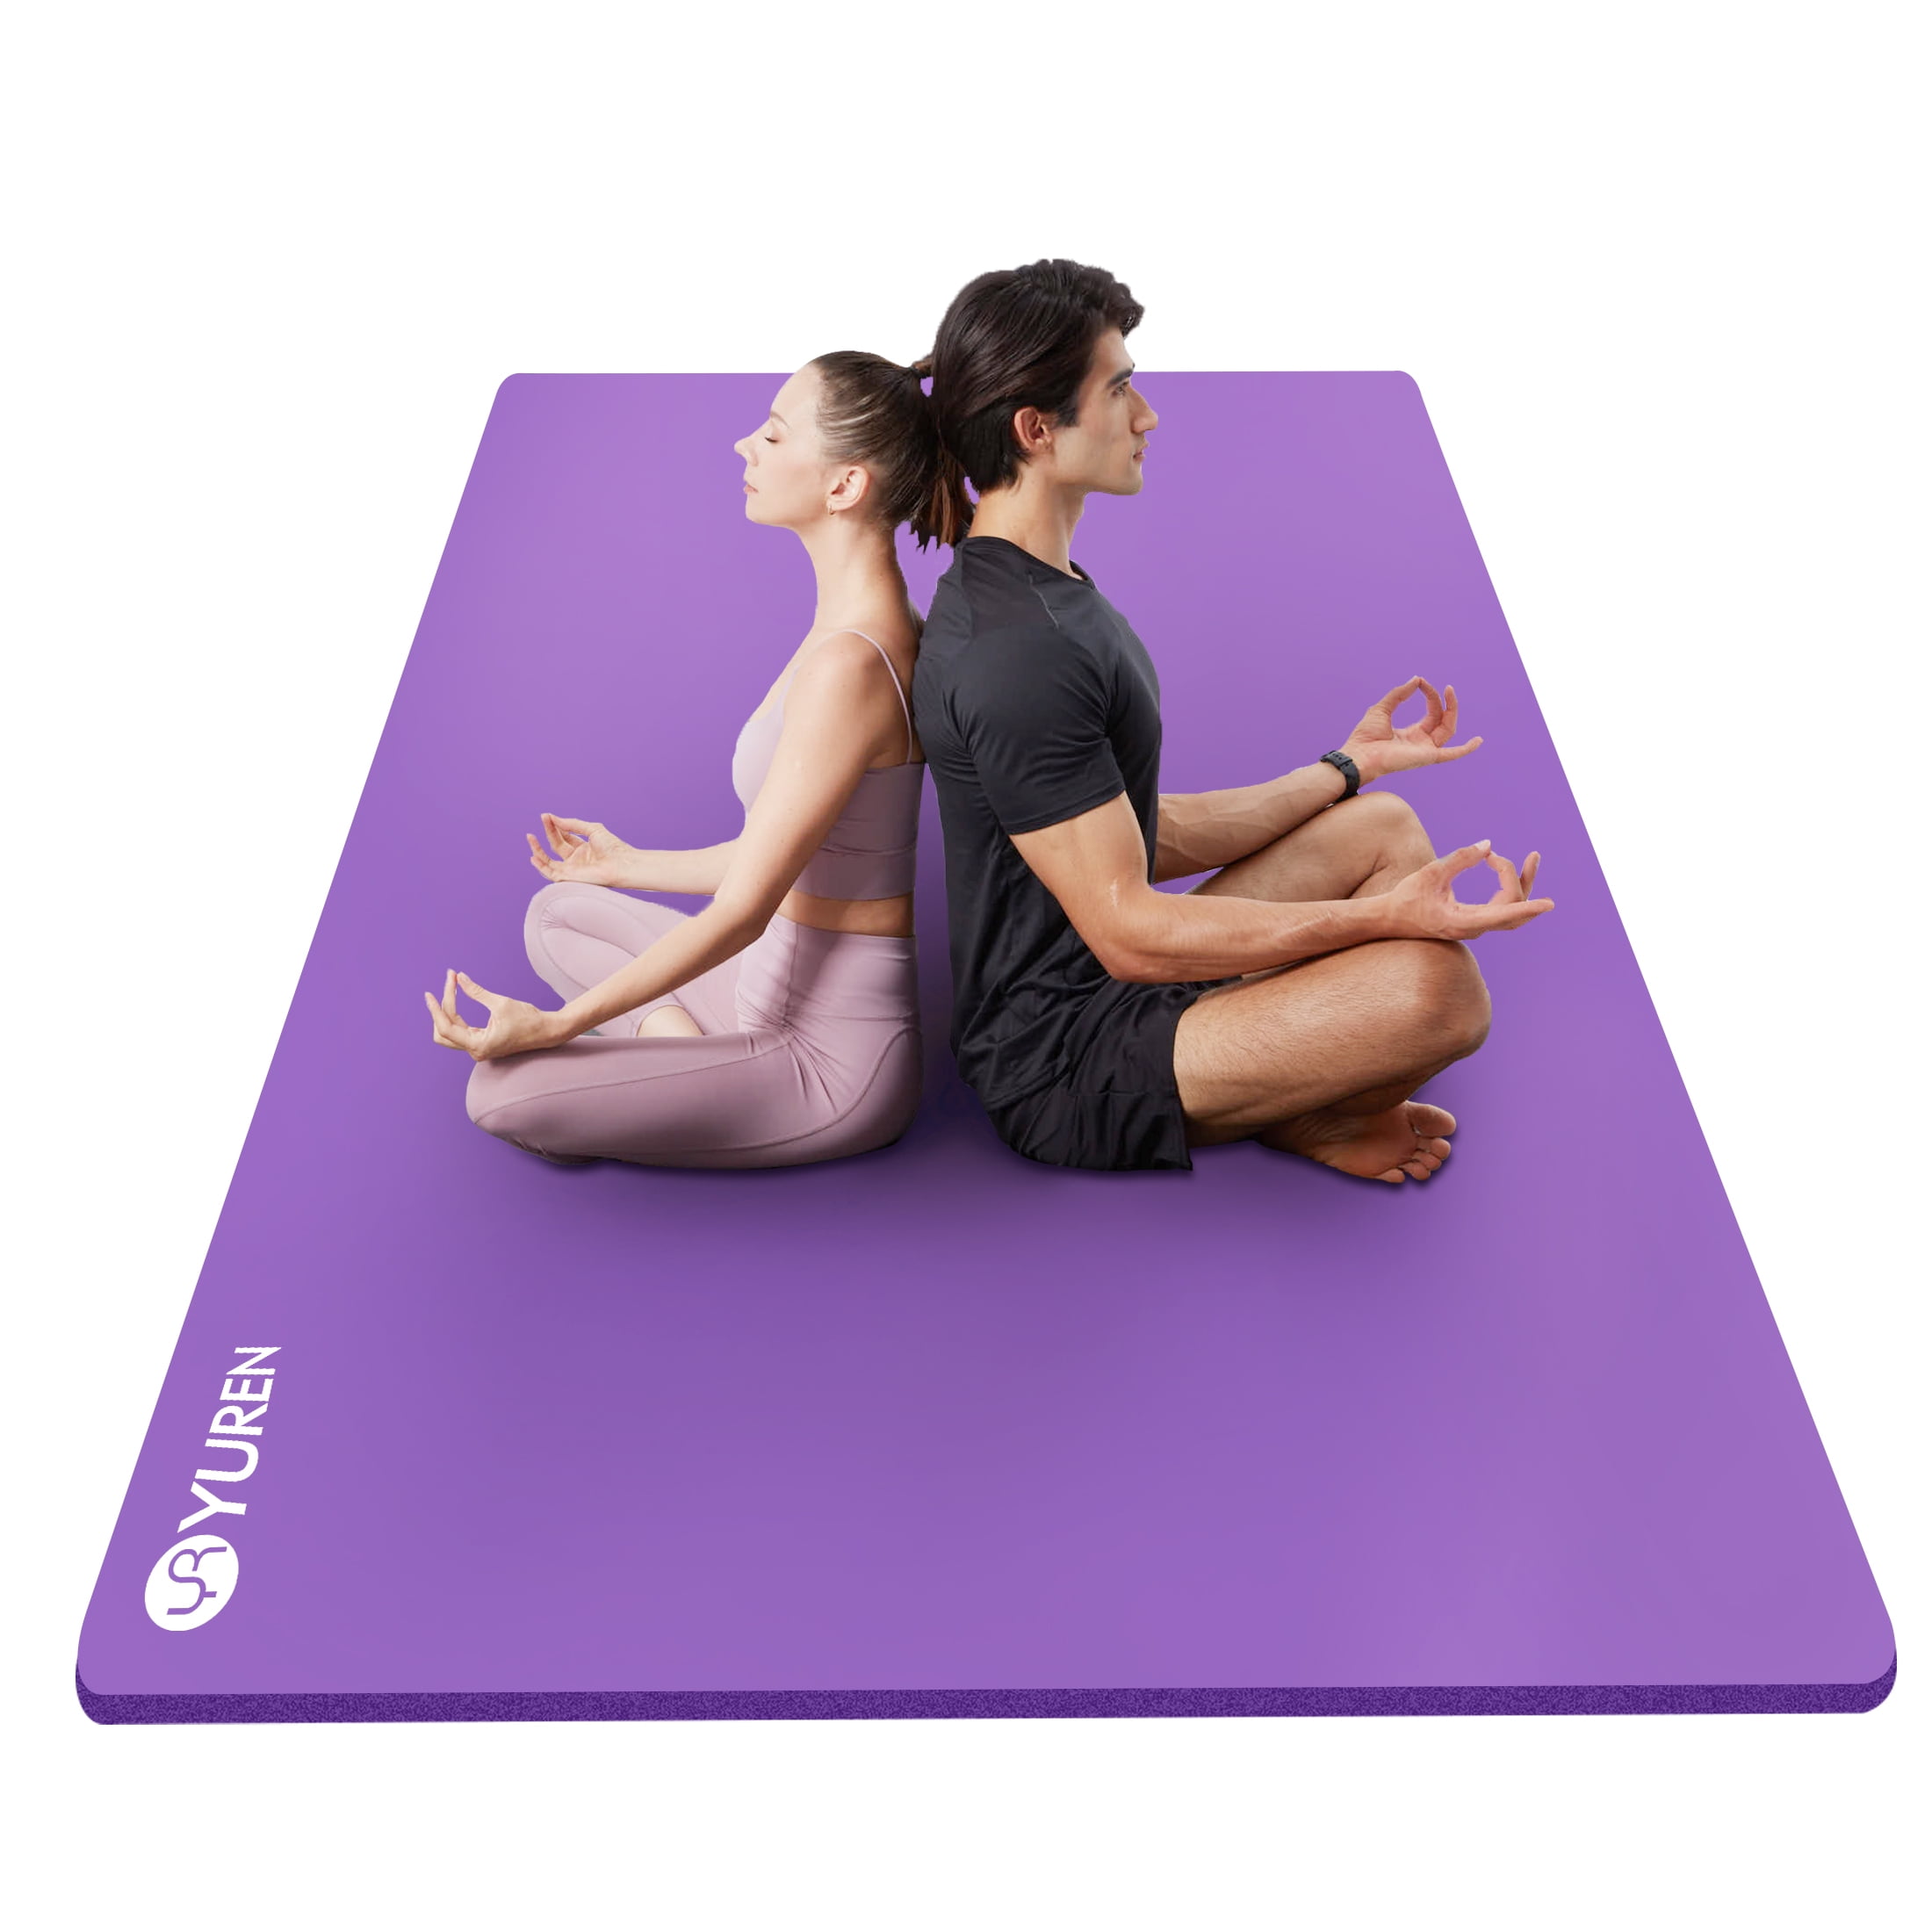 Navaris Round Yoga Mat - 47 Diameter Circular Exercise Mat 1/4 Thick -  Non-Slip Mat for Cardio, Workout, Fitness, Tai Chi, Meditation - Size Small